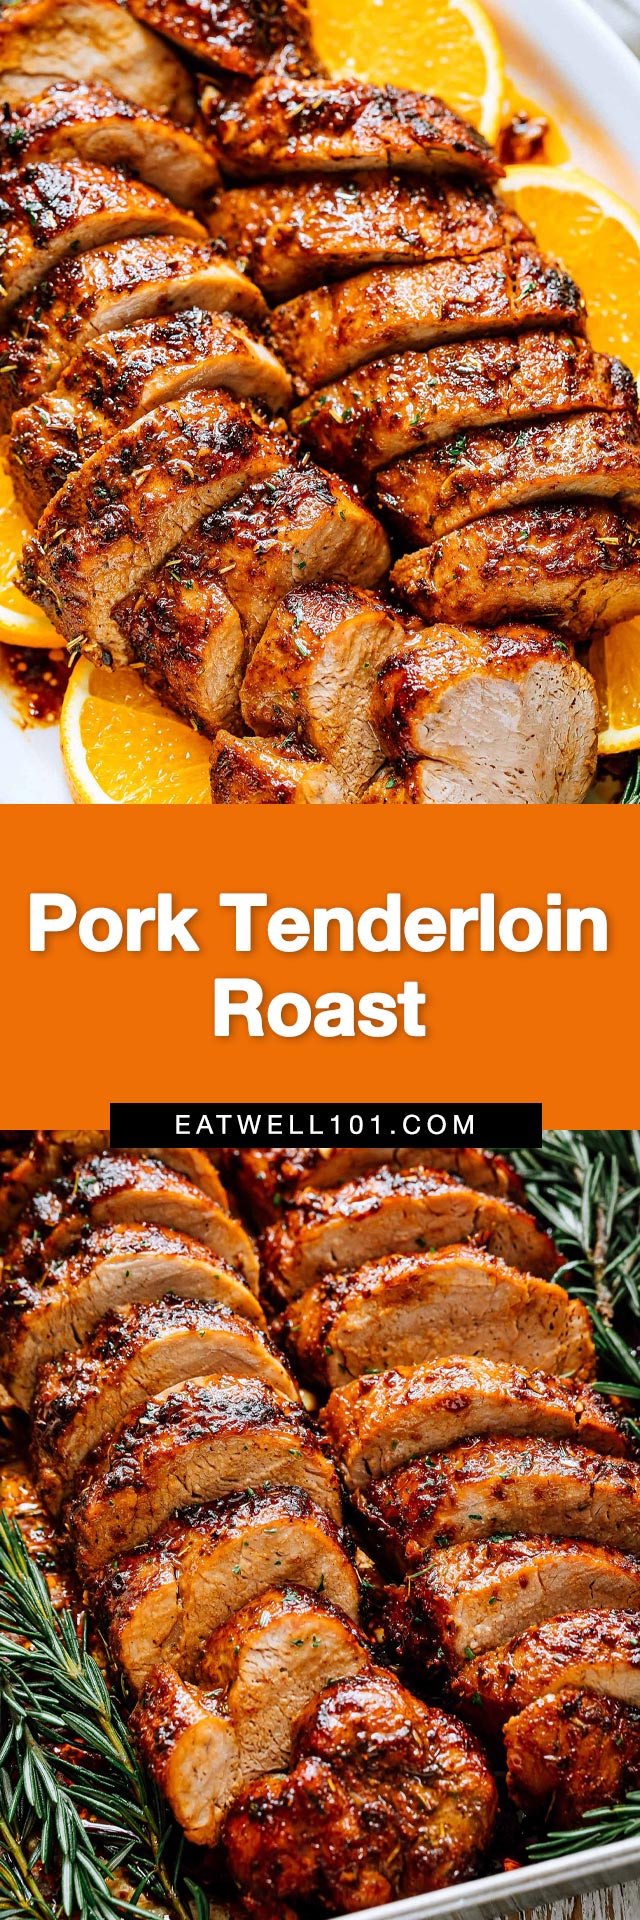 Roasted Pork Tenderloin Recipe -  #pork #tenderloin #recipe #eatwell101 - This roasted pork tenderloin is rich with holiday flavor - Incredibly tender, juicy and delicious!